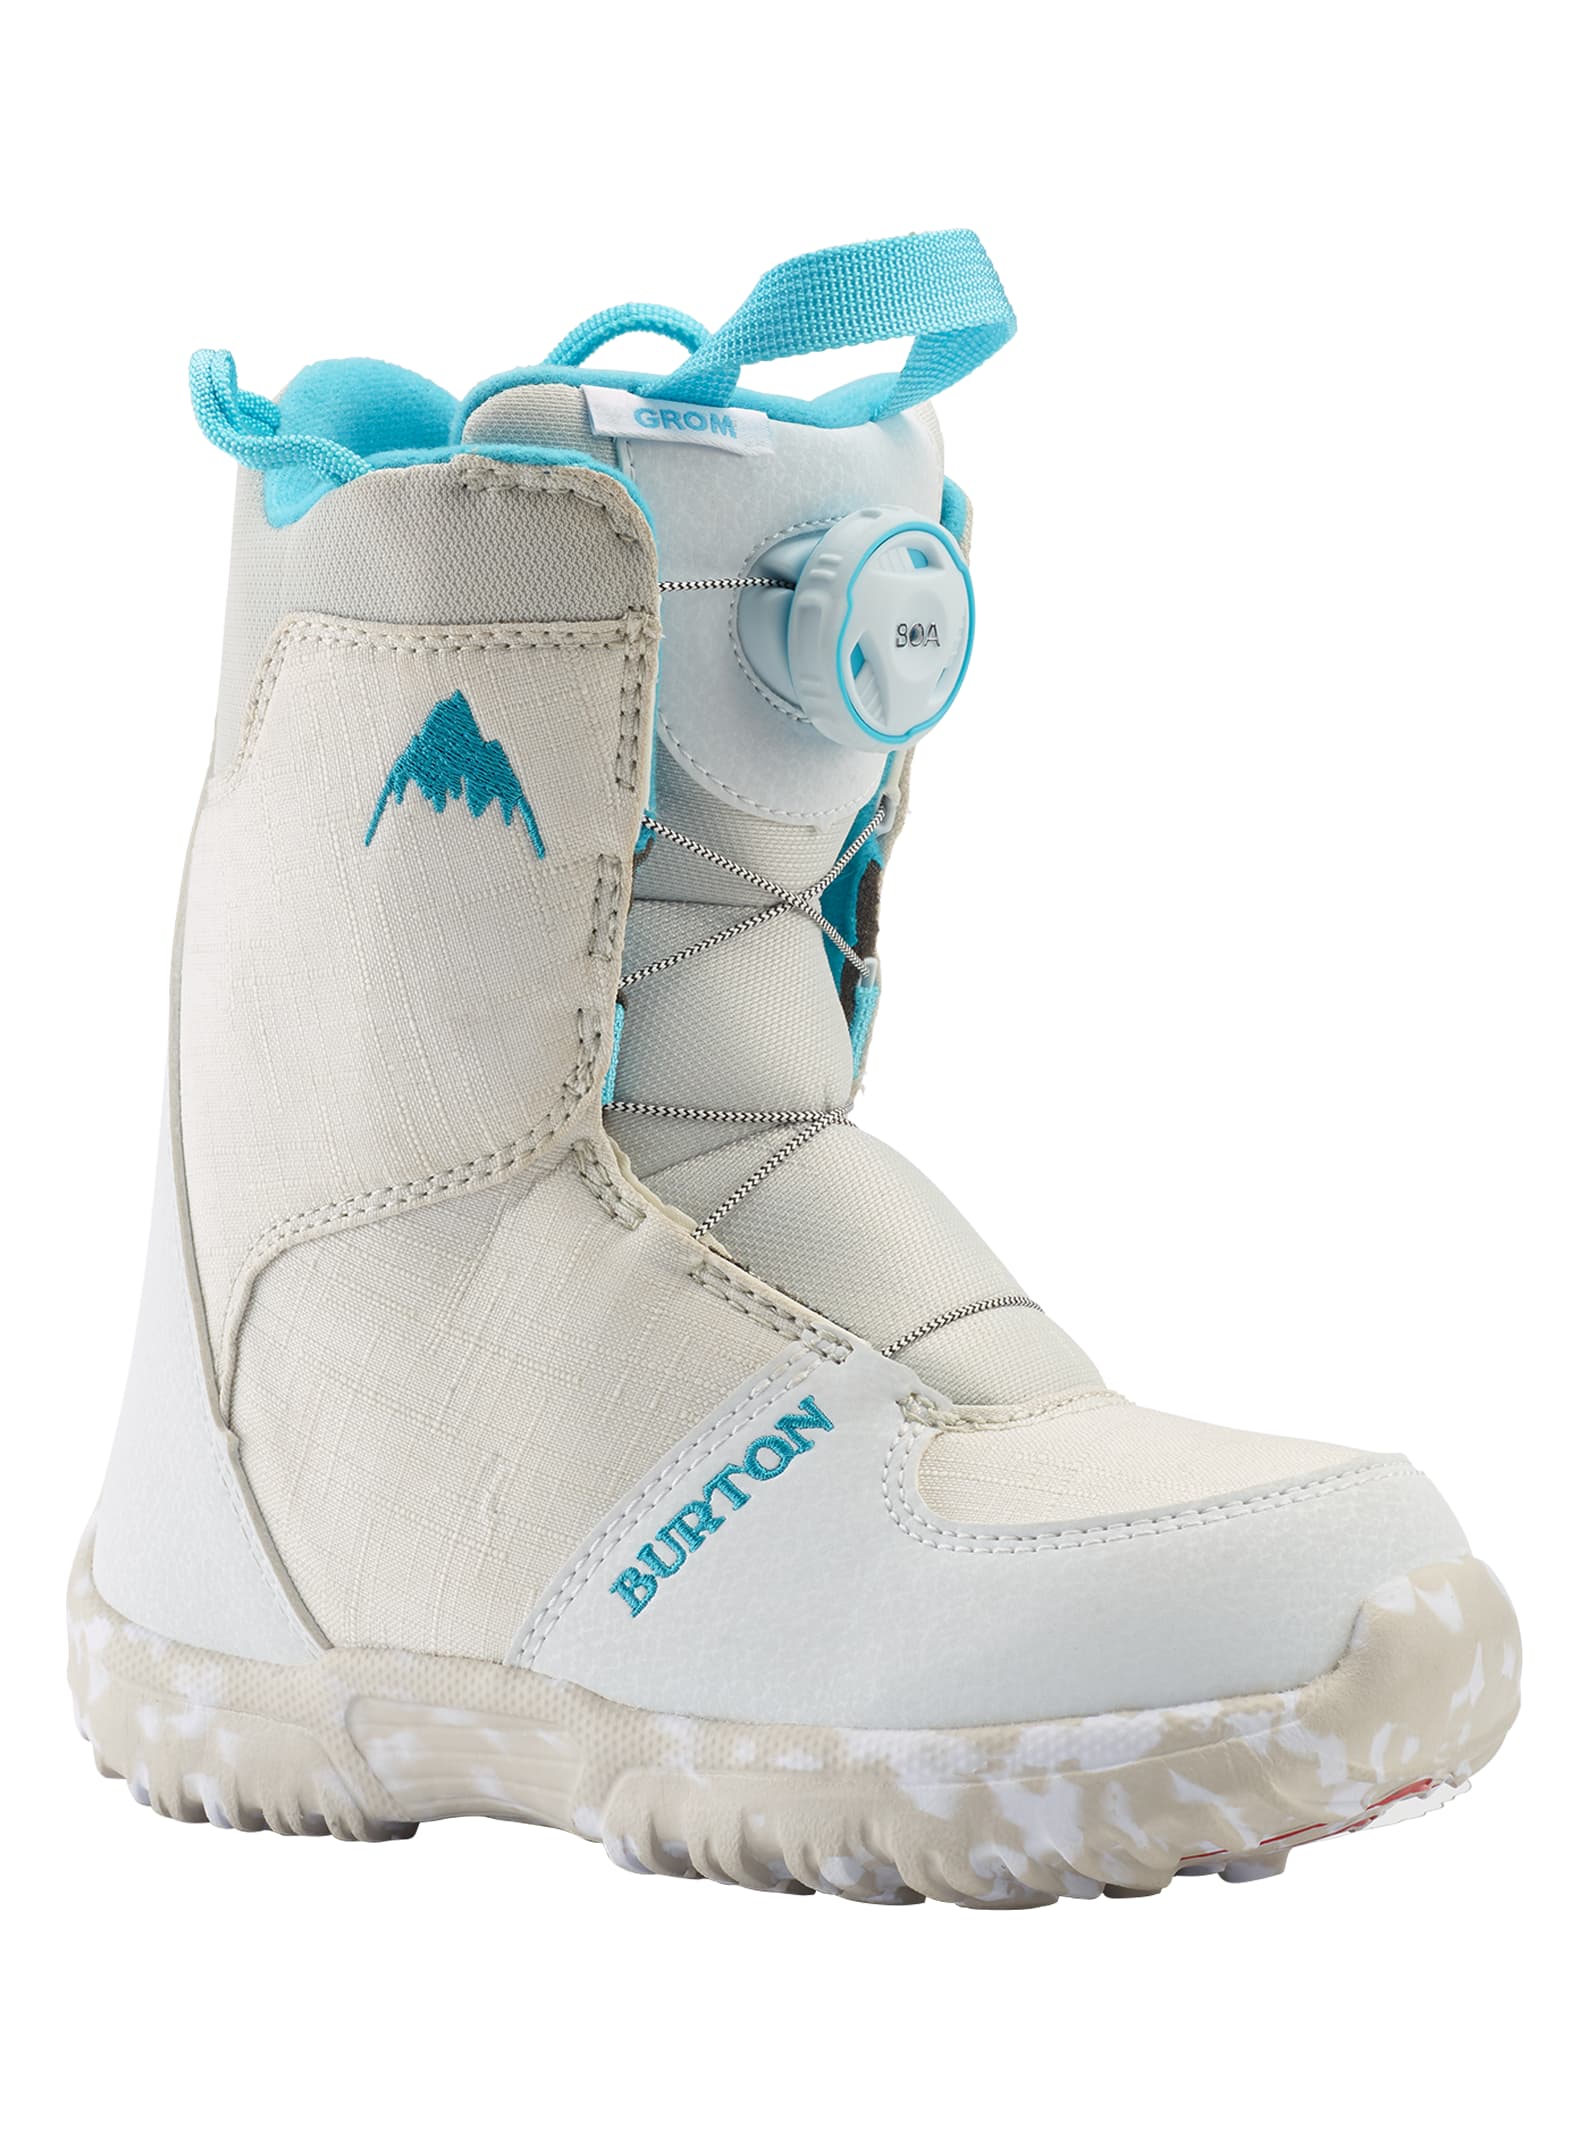 Men's, Women's, and Kids' Snowboard Boots | Burton Snowboards US